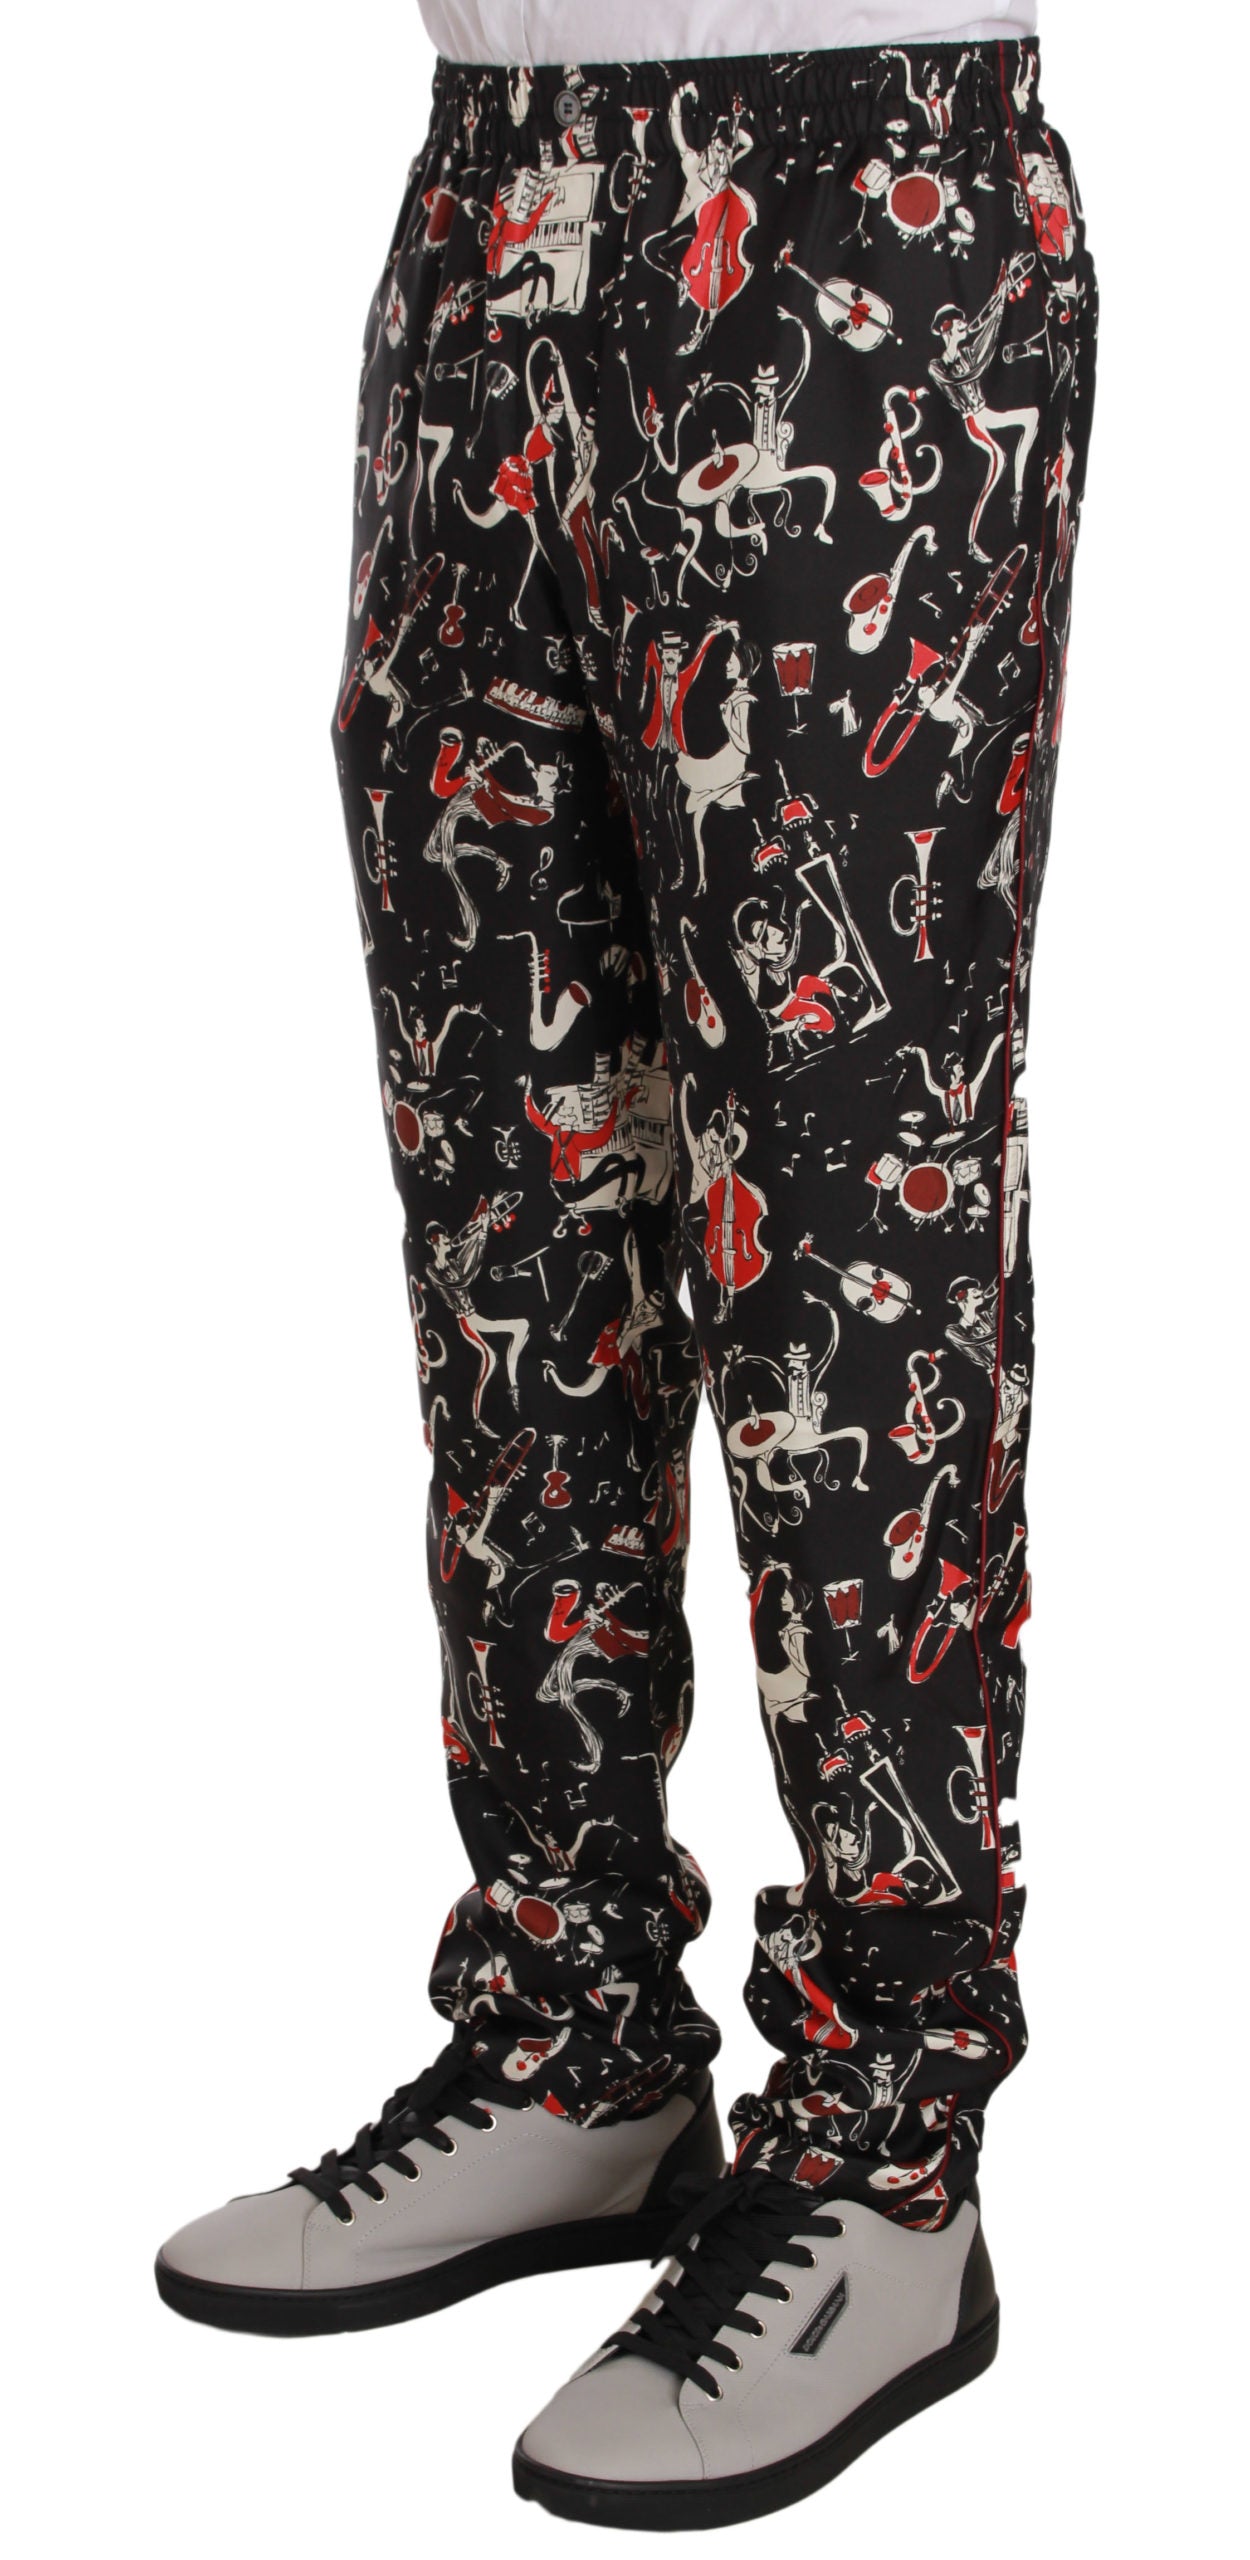 Buy Red Musical Instrument Print Sleepwear Pants by Dolce & Gabbana